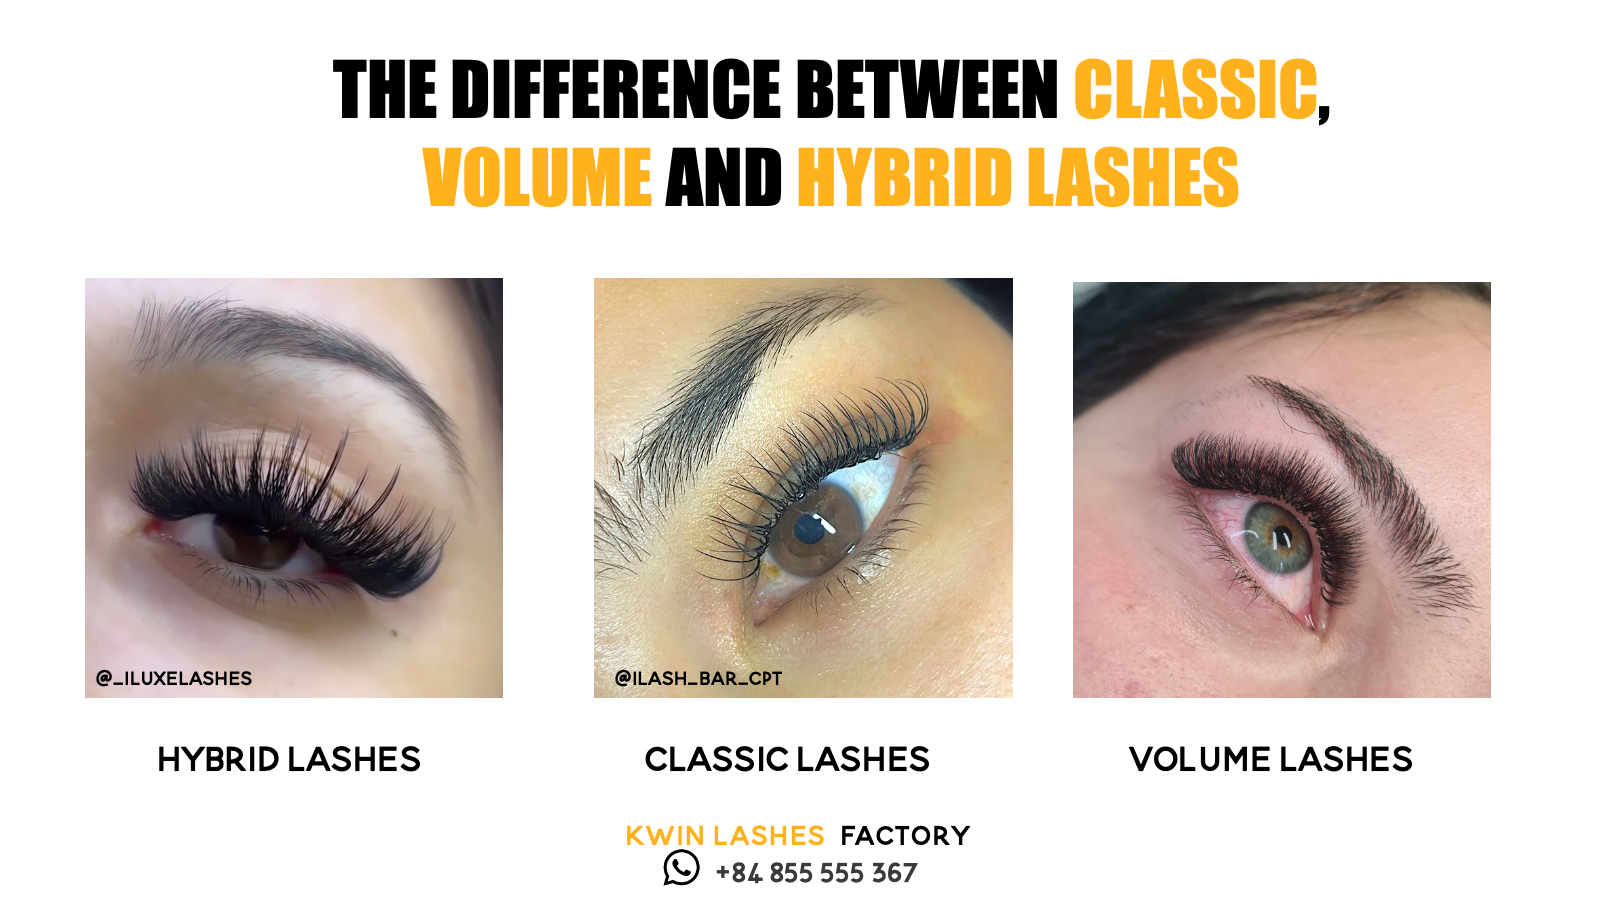 Hybrid Lashes, Classic lashes, And Volume Lashes